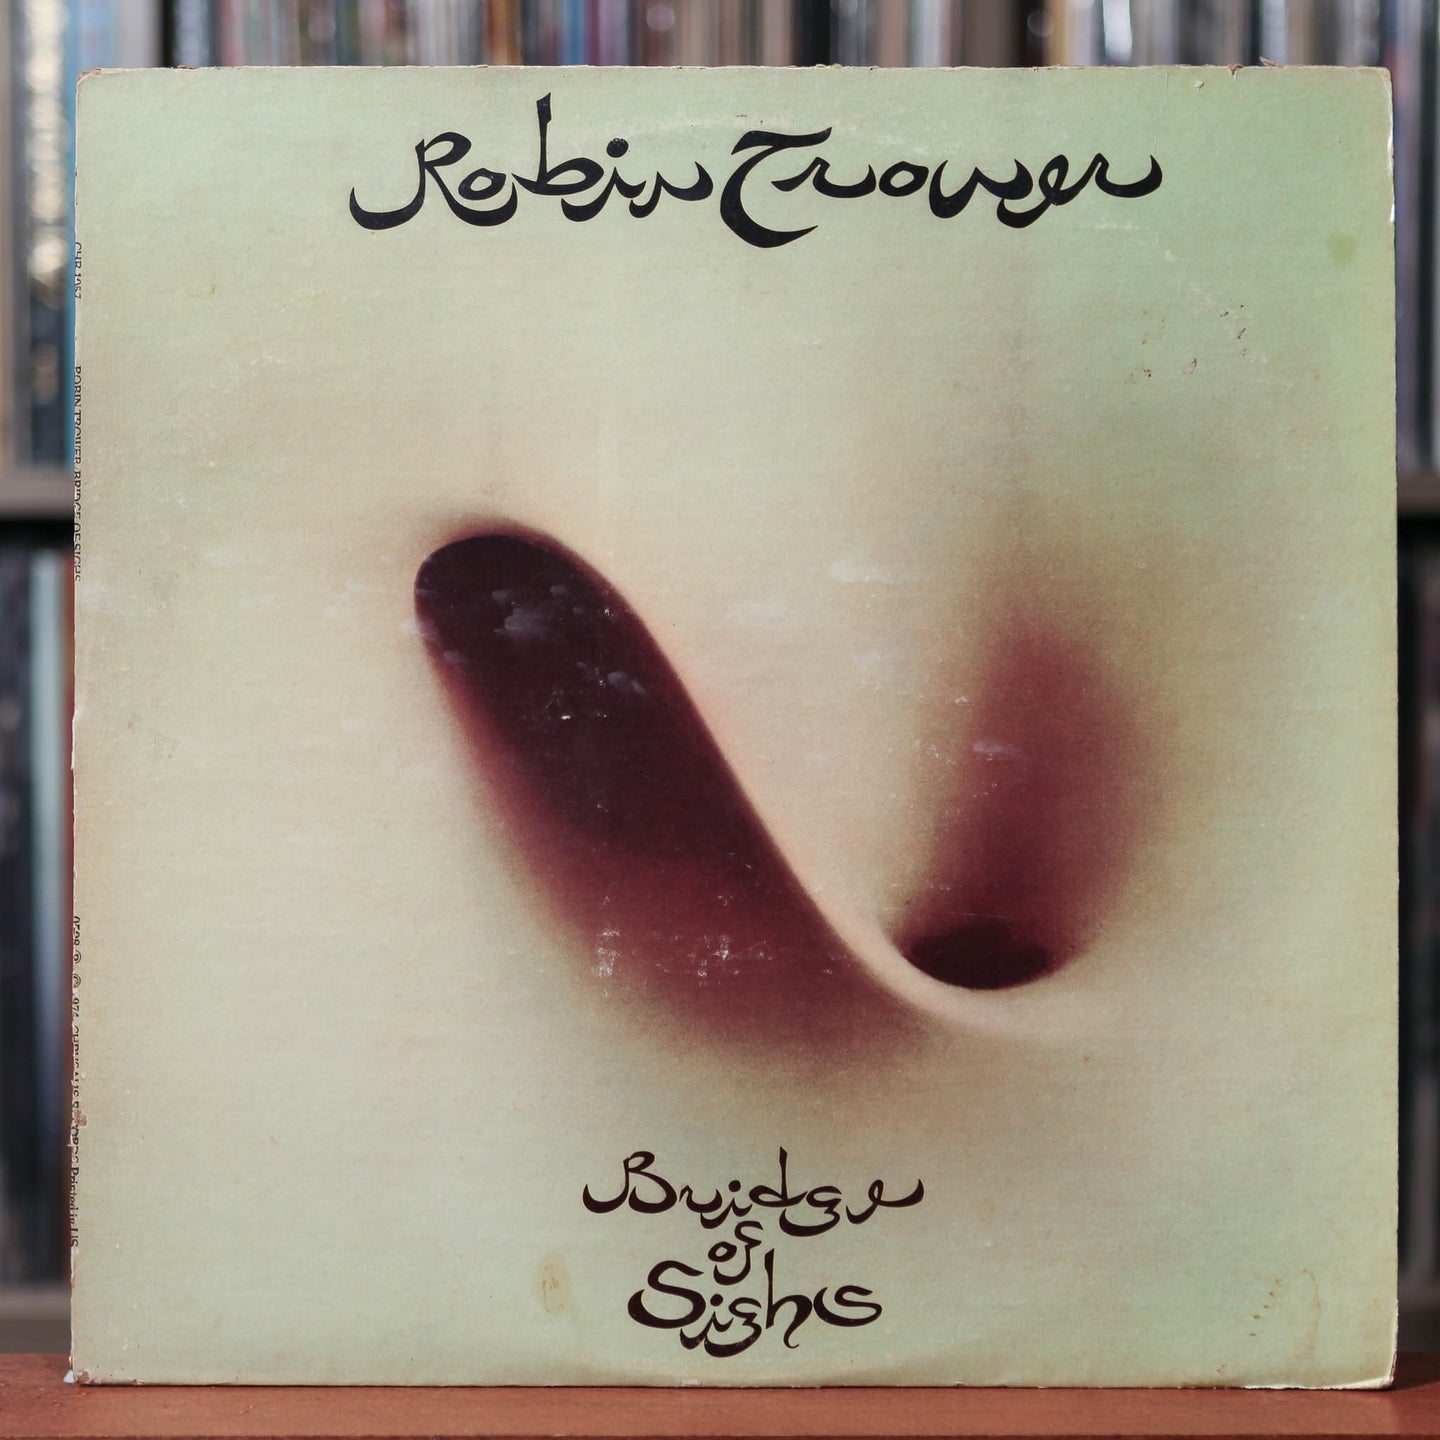 Robin Trower - Bridge Of Sighs - 1974 Chrysalis, VG/VG